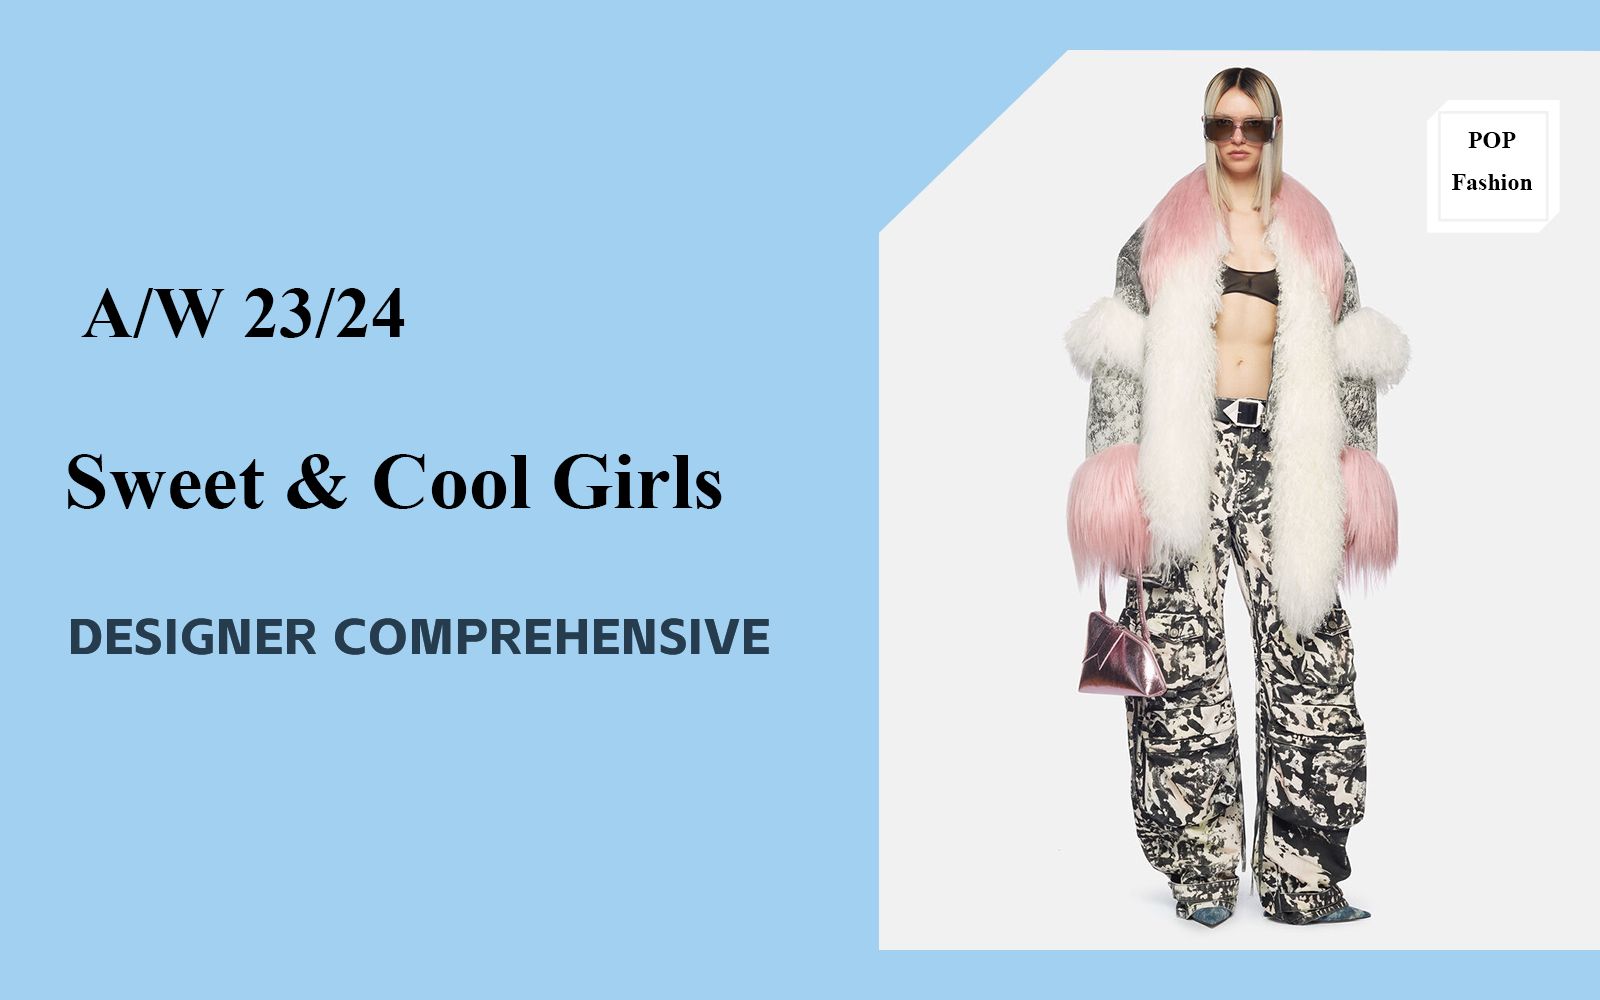 Sweet & Cool Girls -- The Comprehensive Analysis of Womenswear Designer Brand